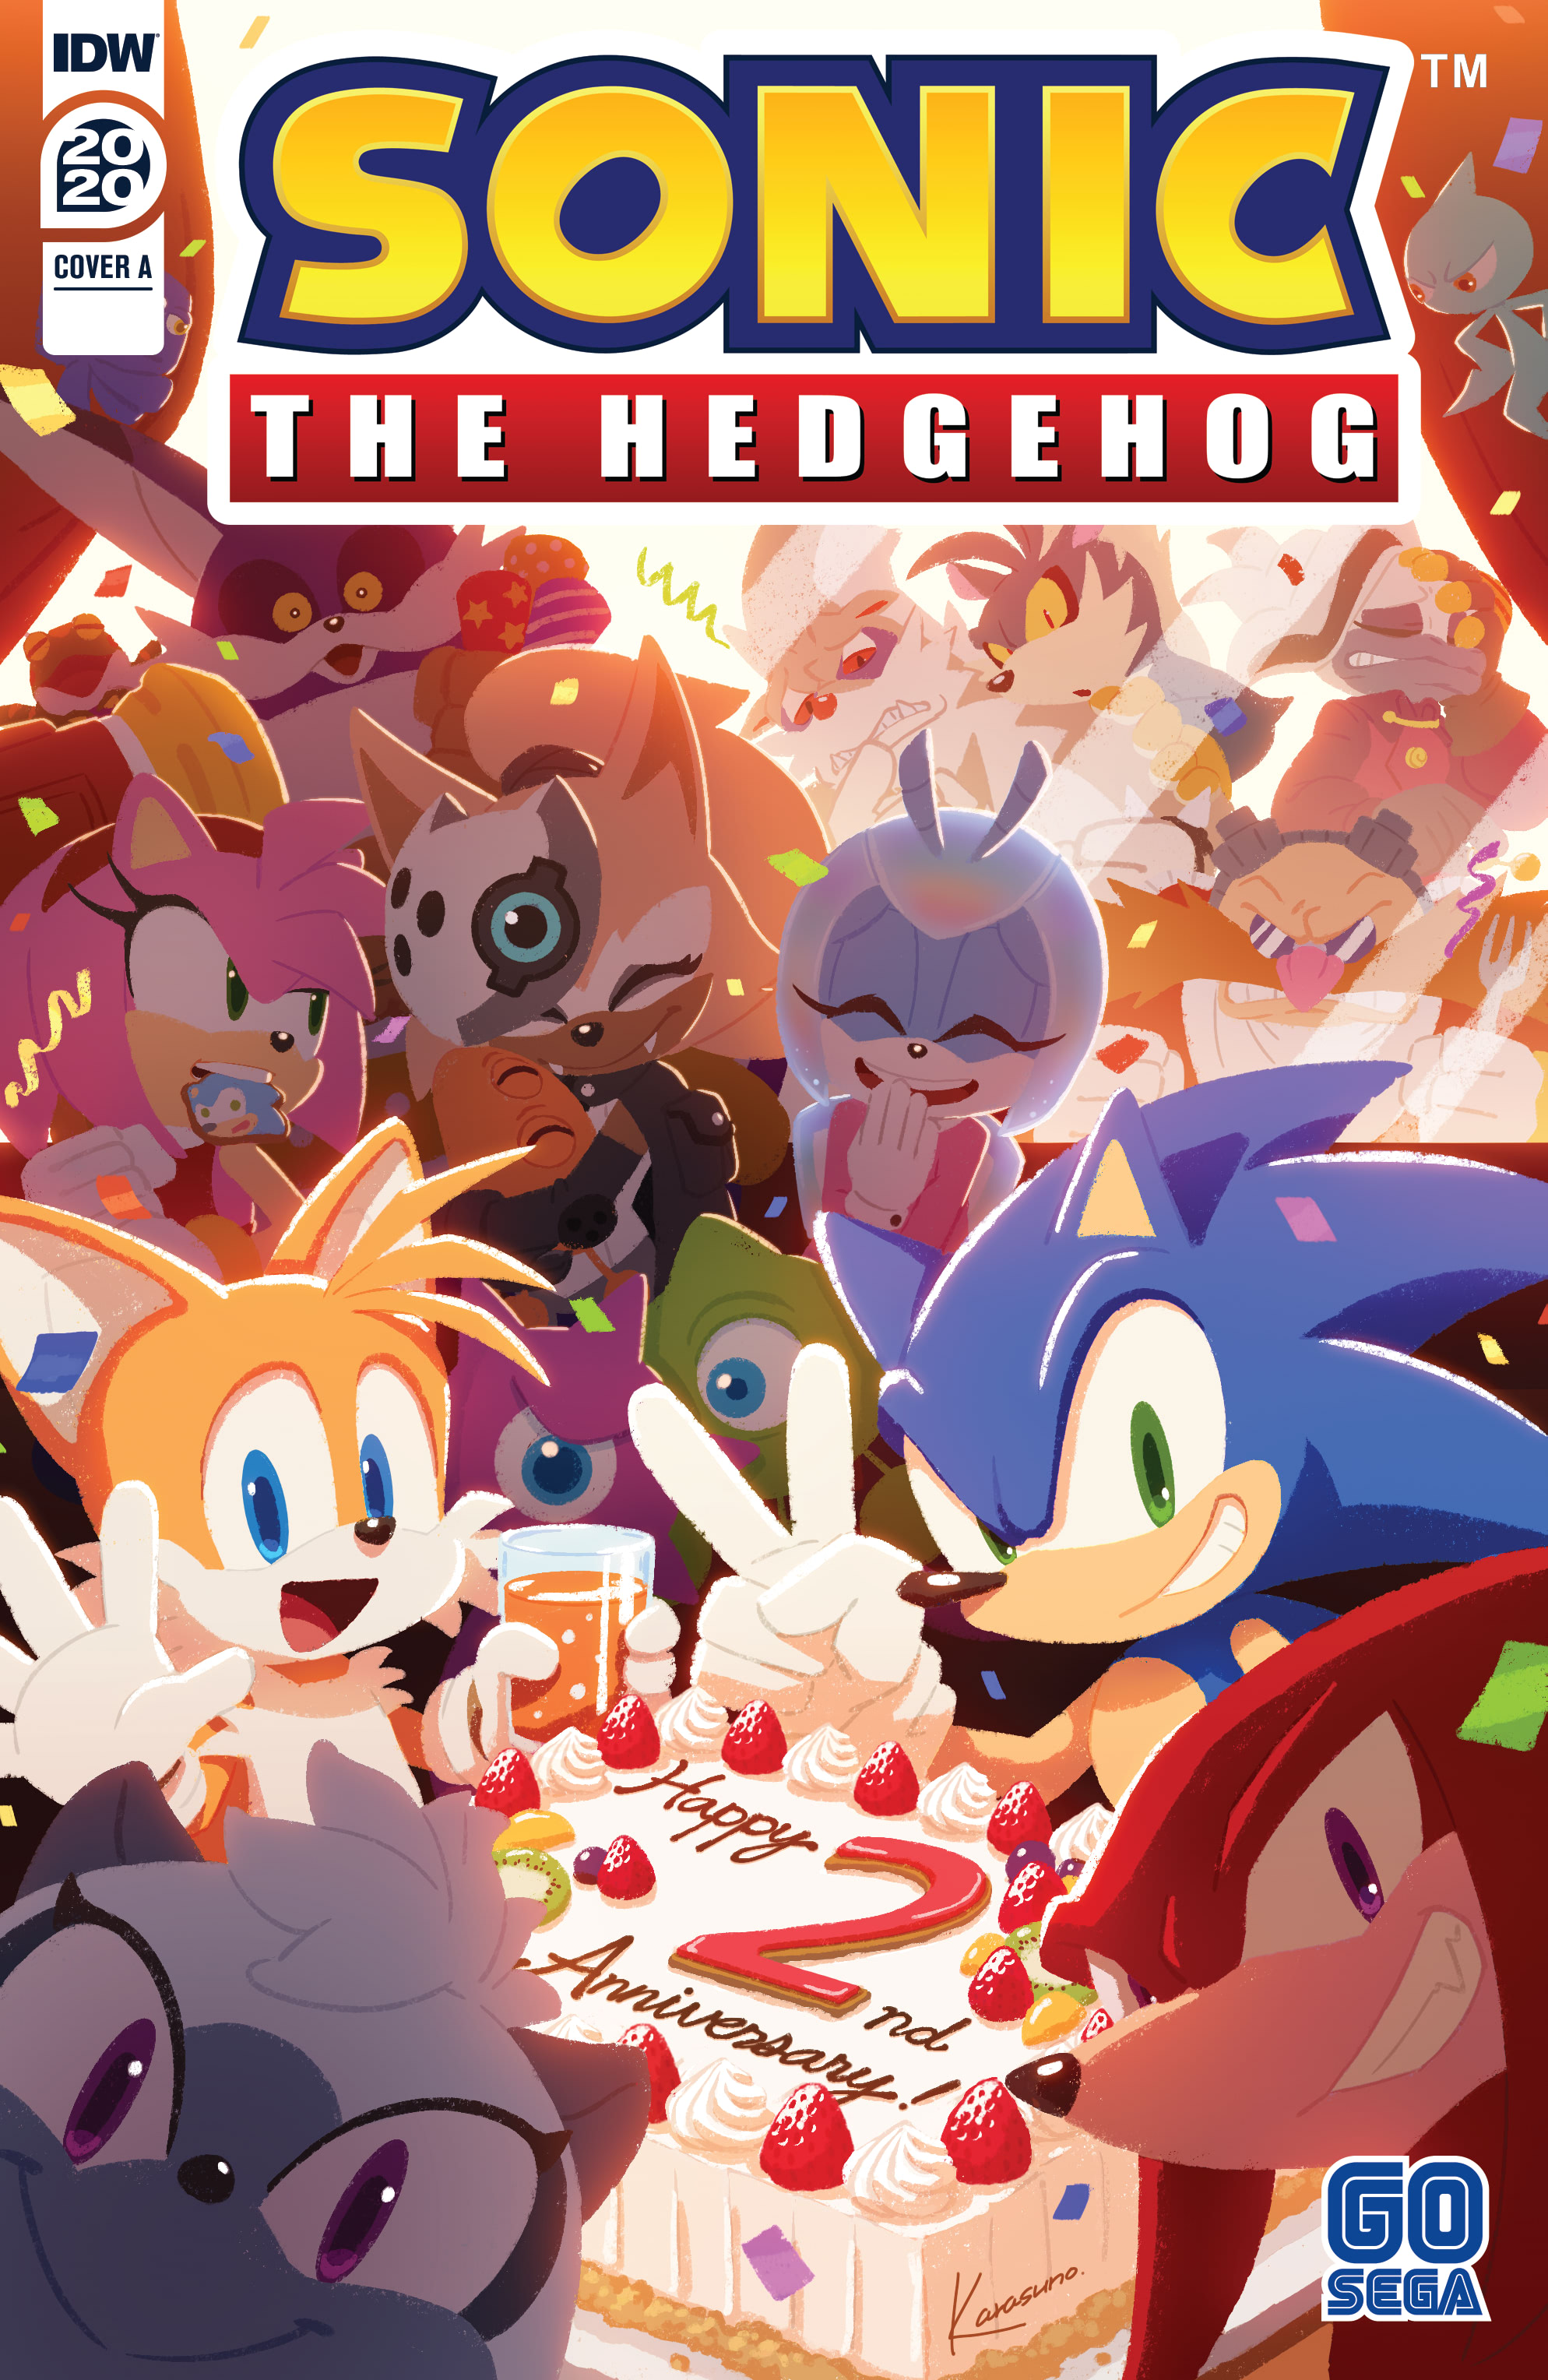 Sonic The Comic - Graphic Novel - Read Comic Online